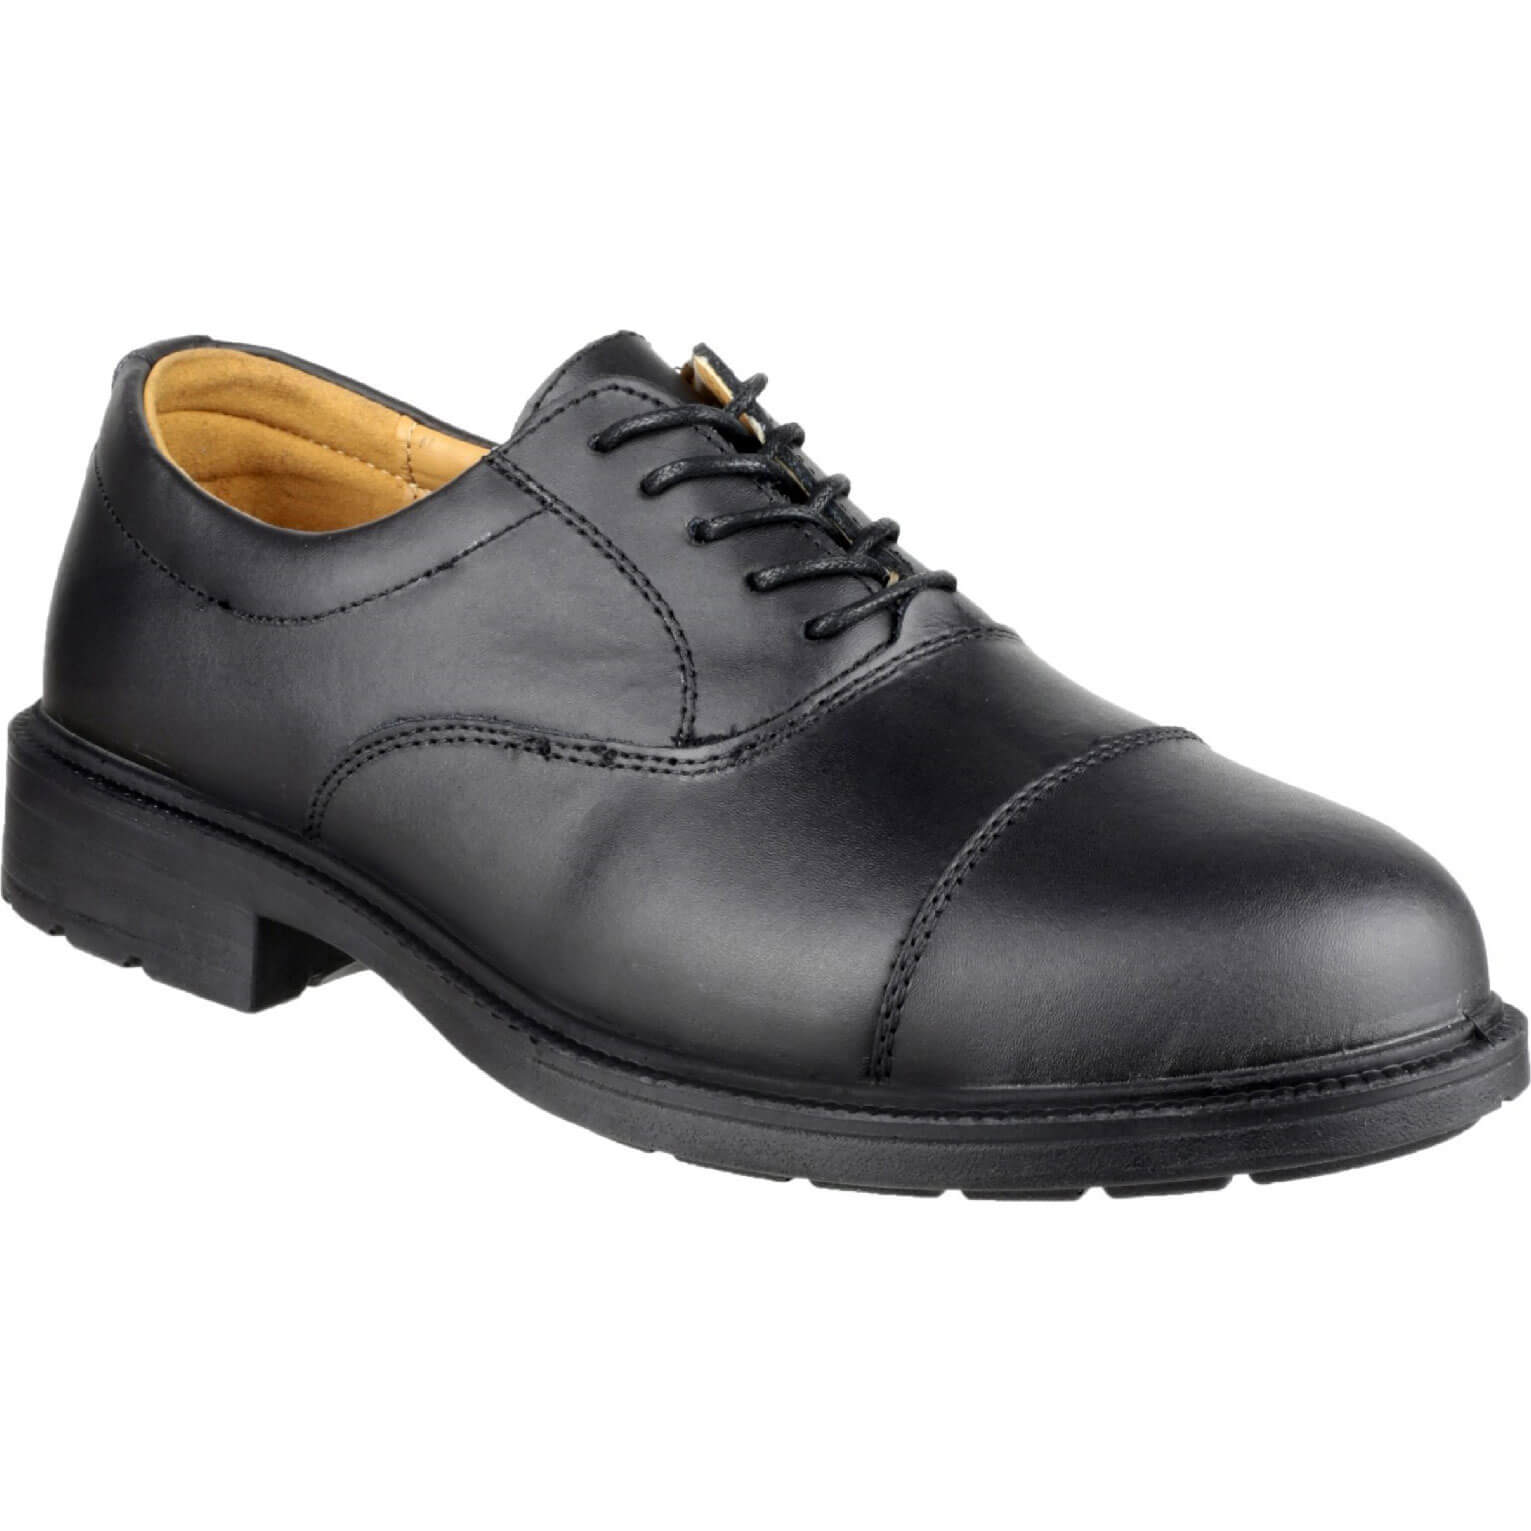 Image of Amblers Safety FS43 Work Safety Shoe Black Size 11